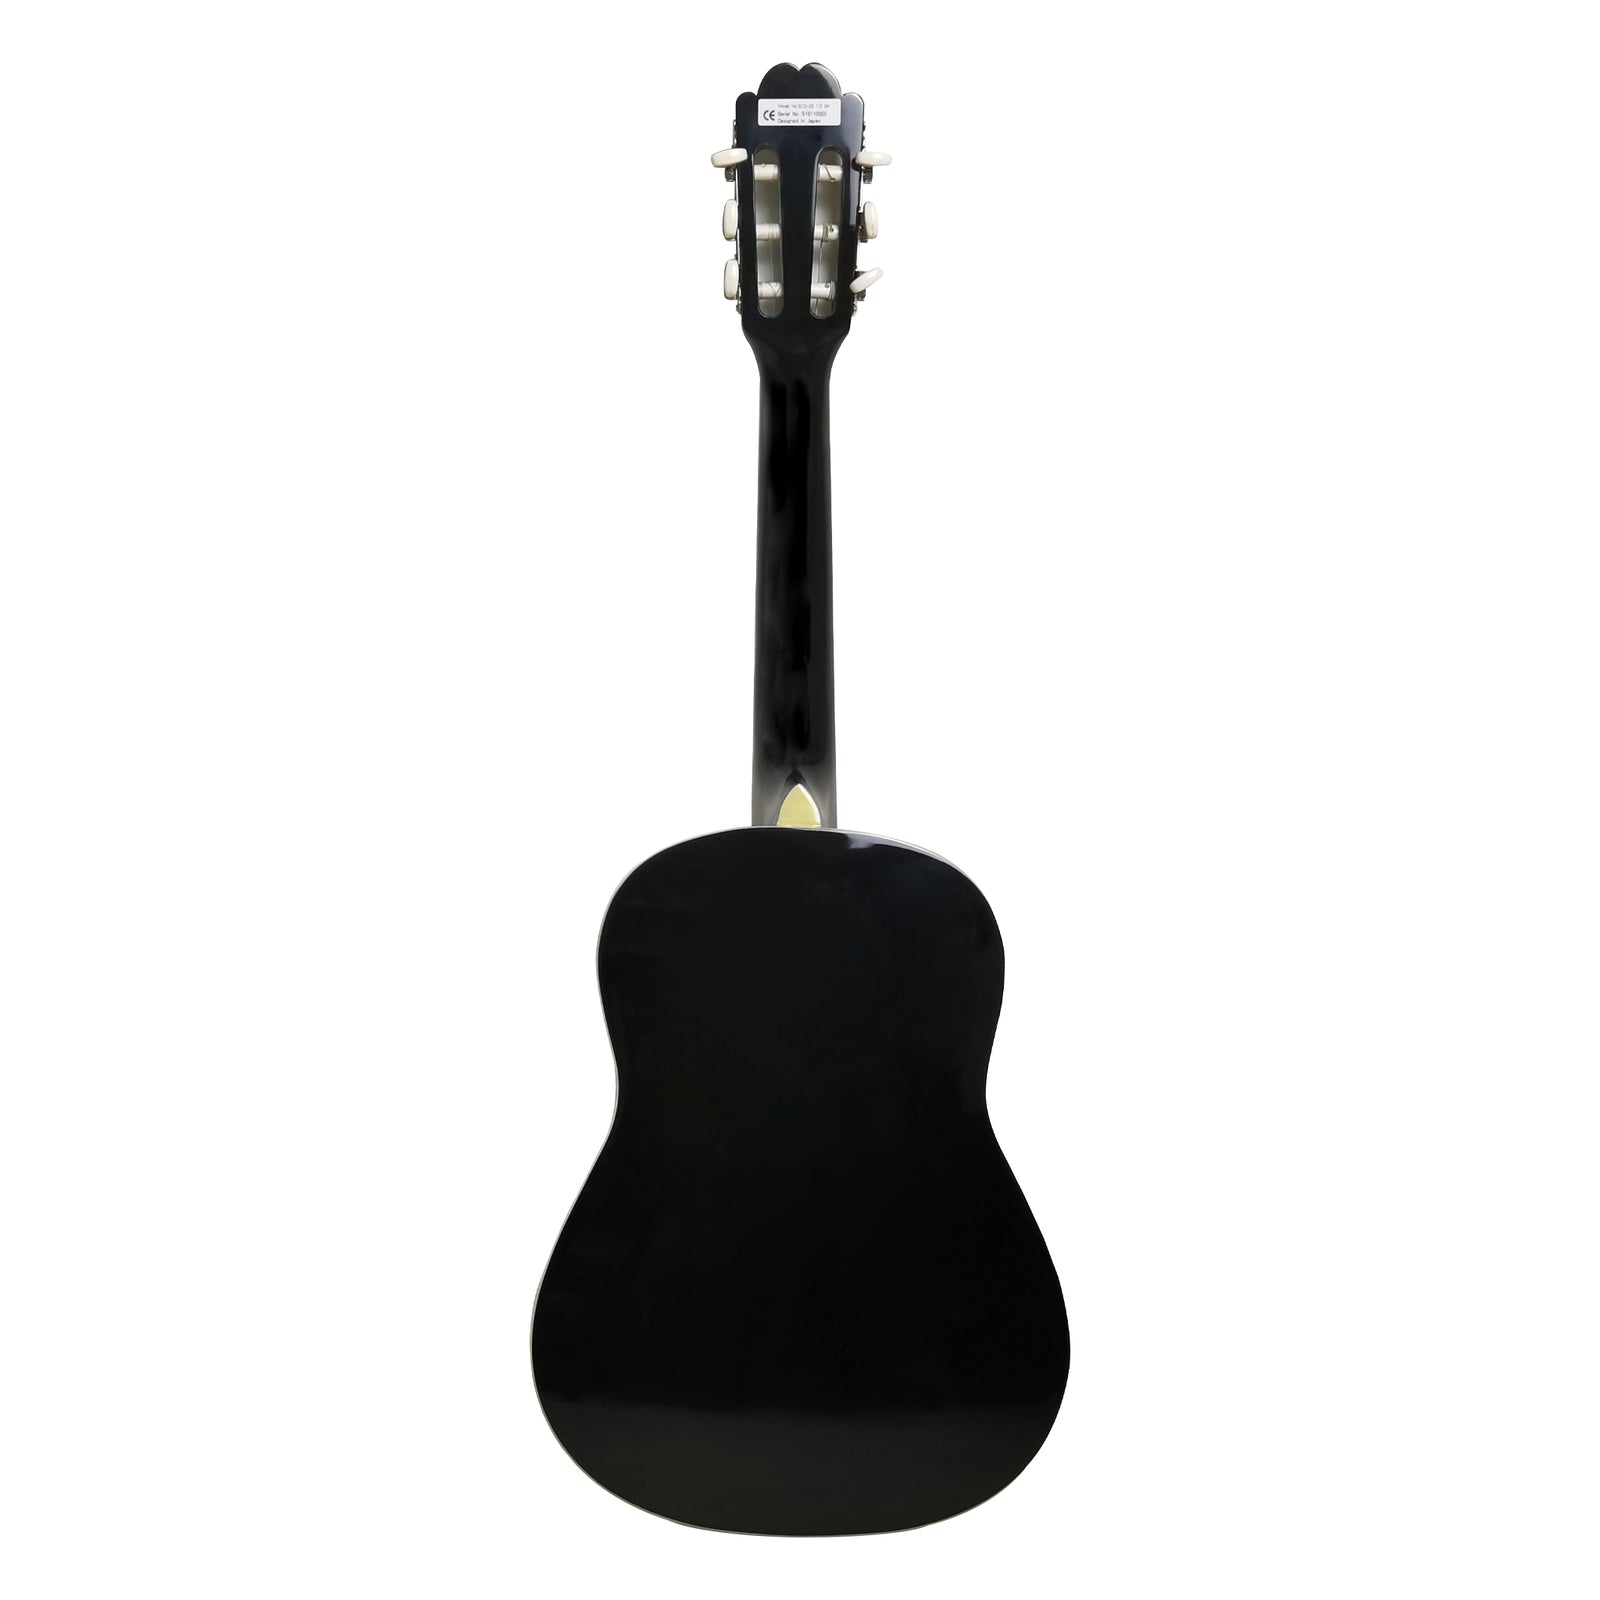 Suzuki SCG-2S 3/4 Classical Guitar Black